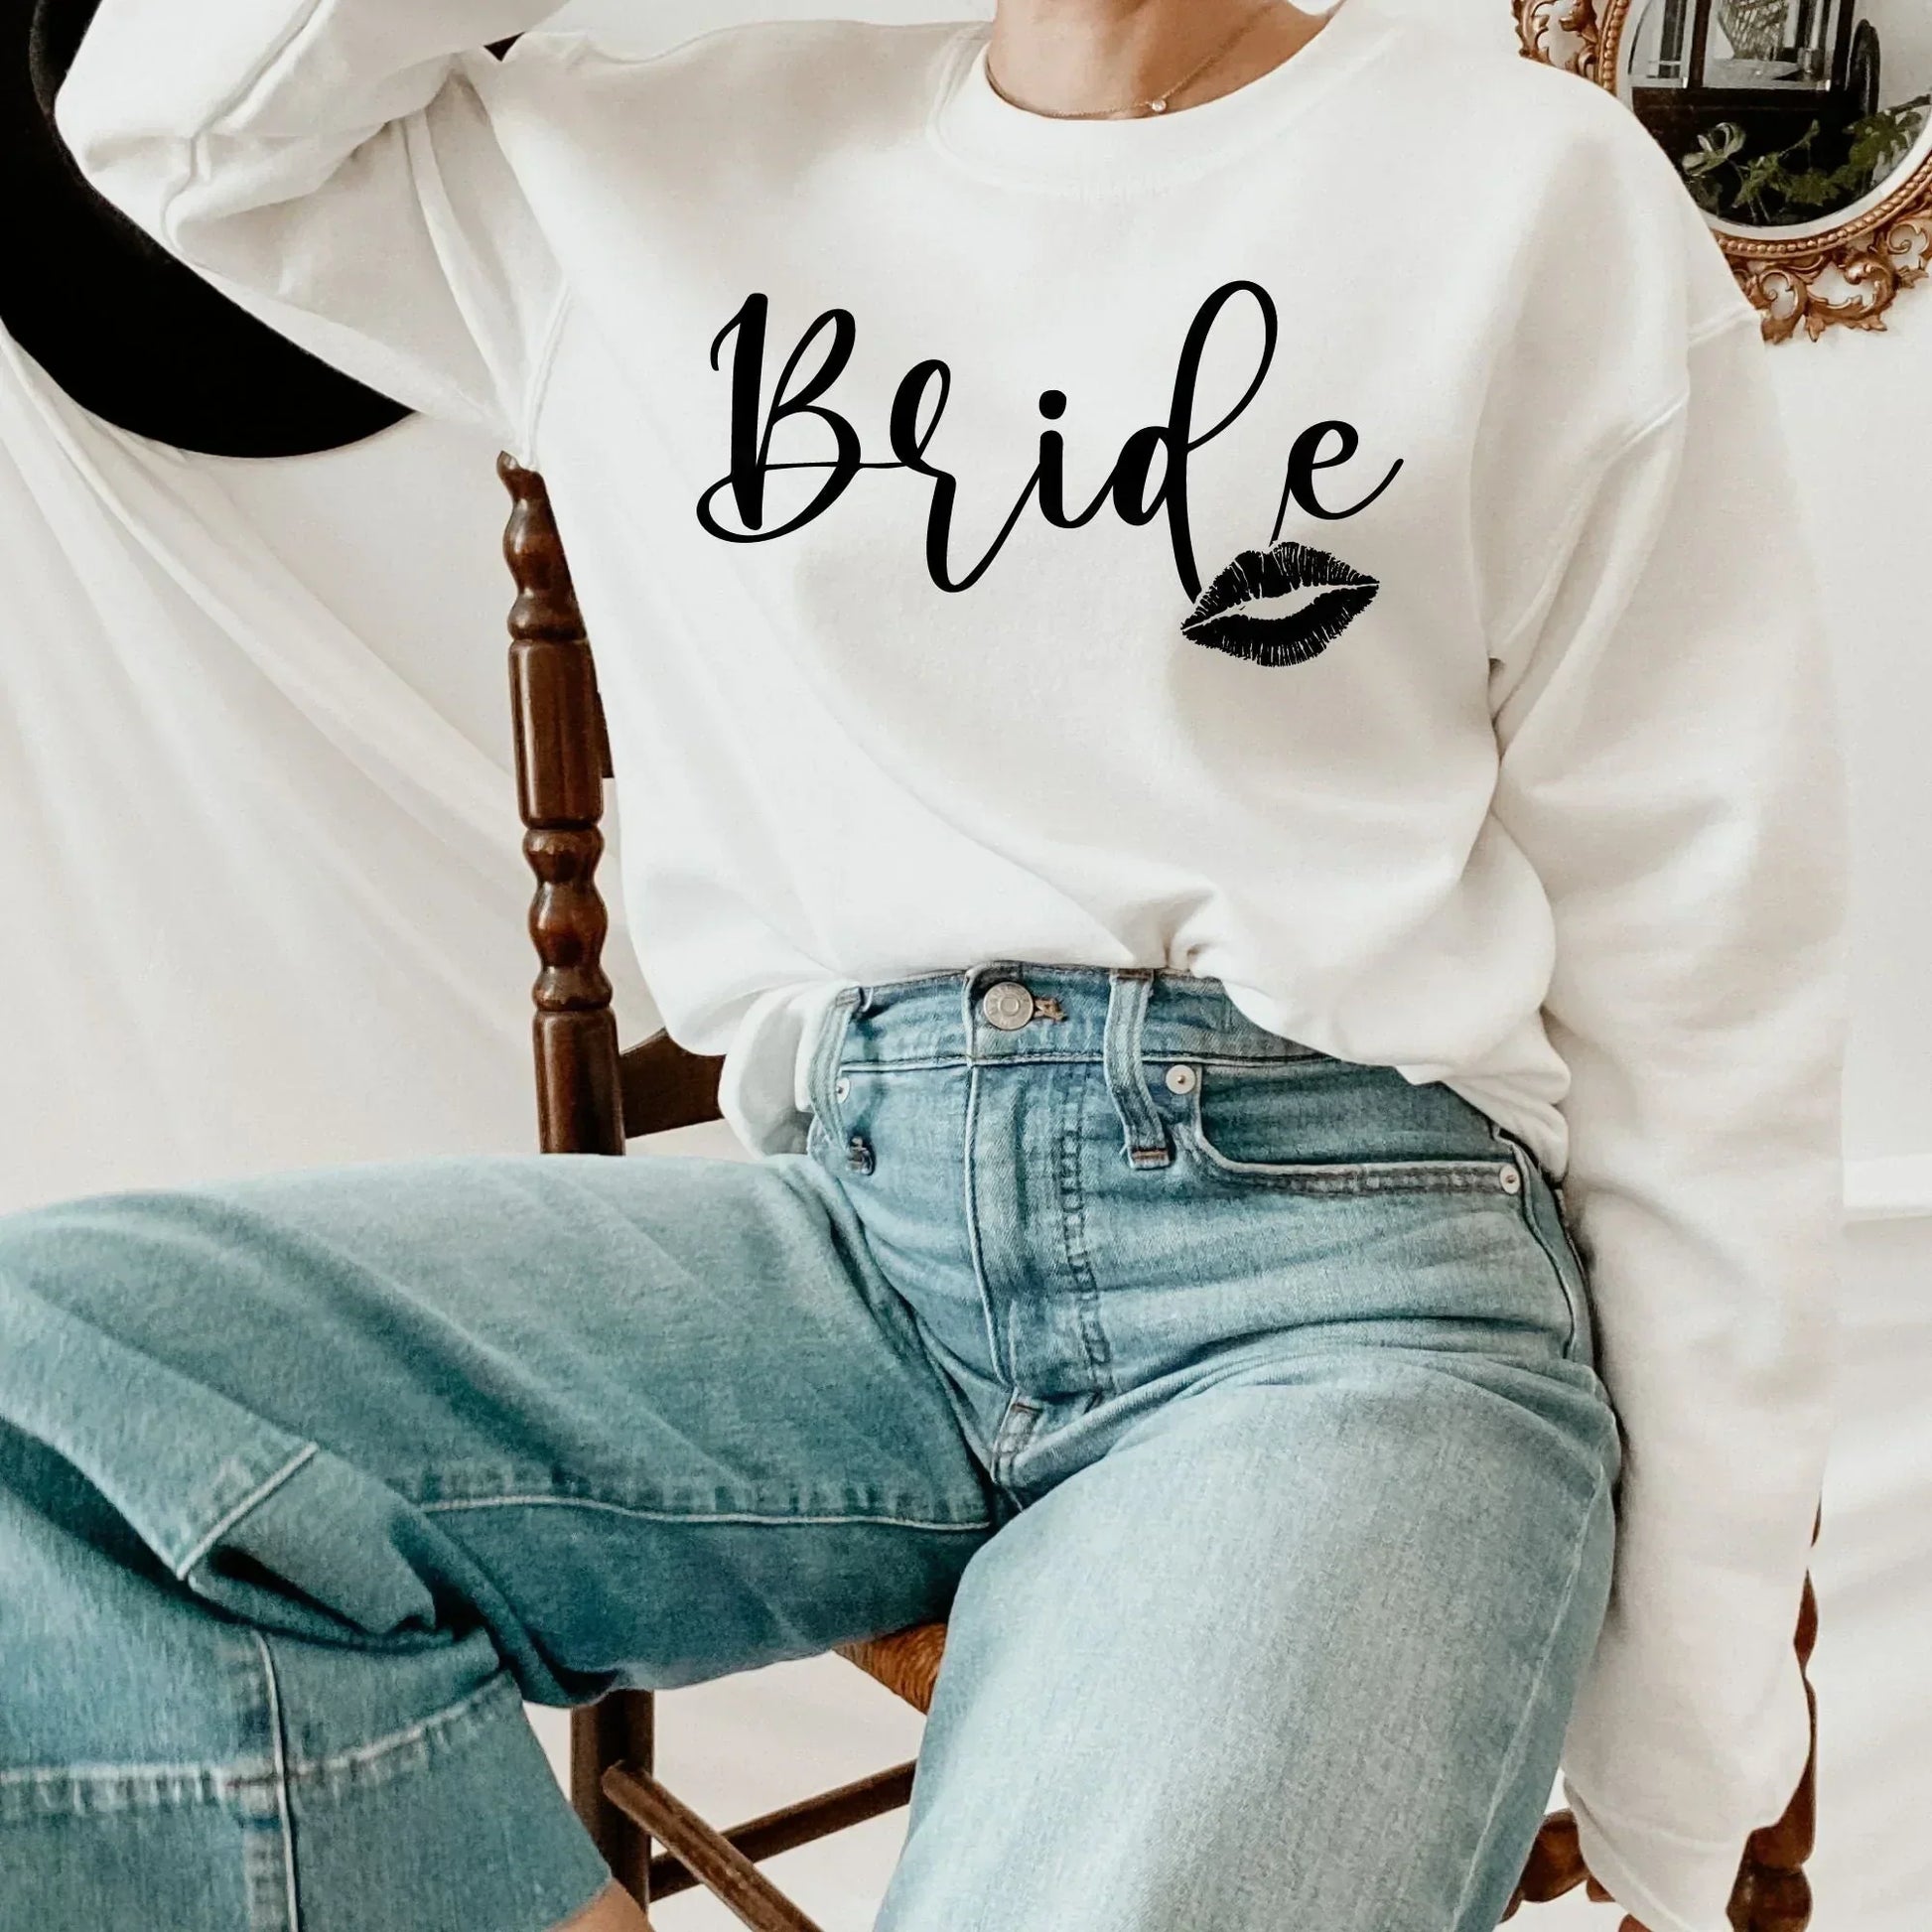 Bride Sweatshirt, Future Mrs Custom, Wifey Sweatshirt, Getting Ready Outfit, Team Bride Shirt, Wife Hoodie, Gift for Bride, Crewneck Sweater